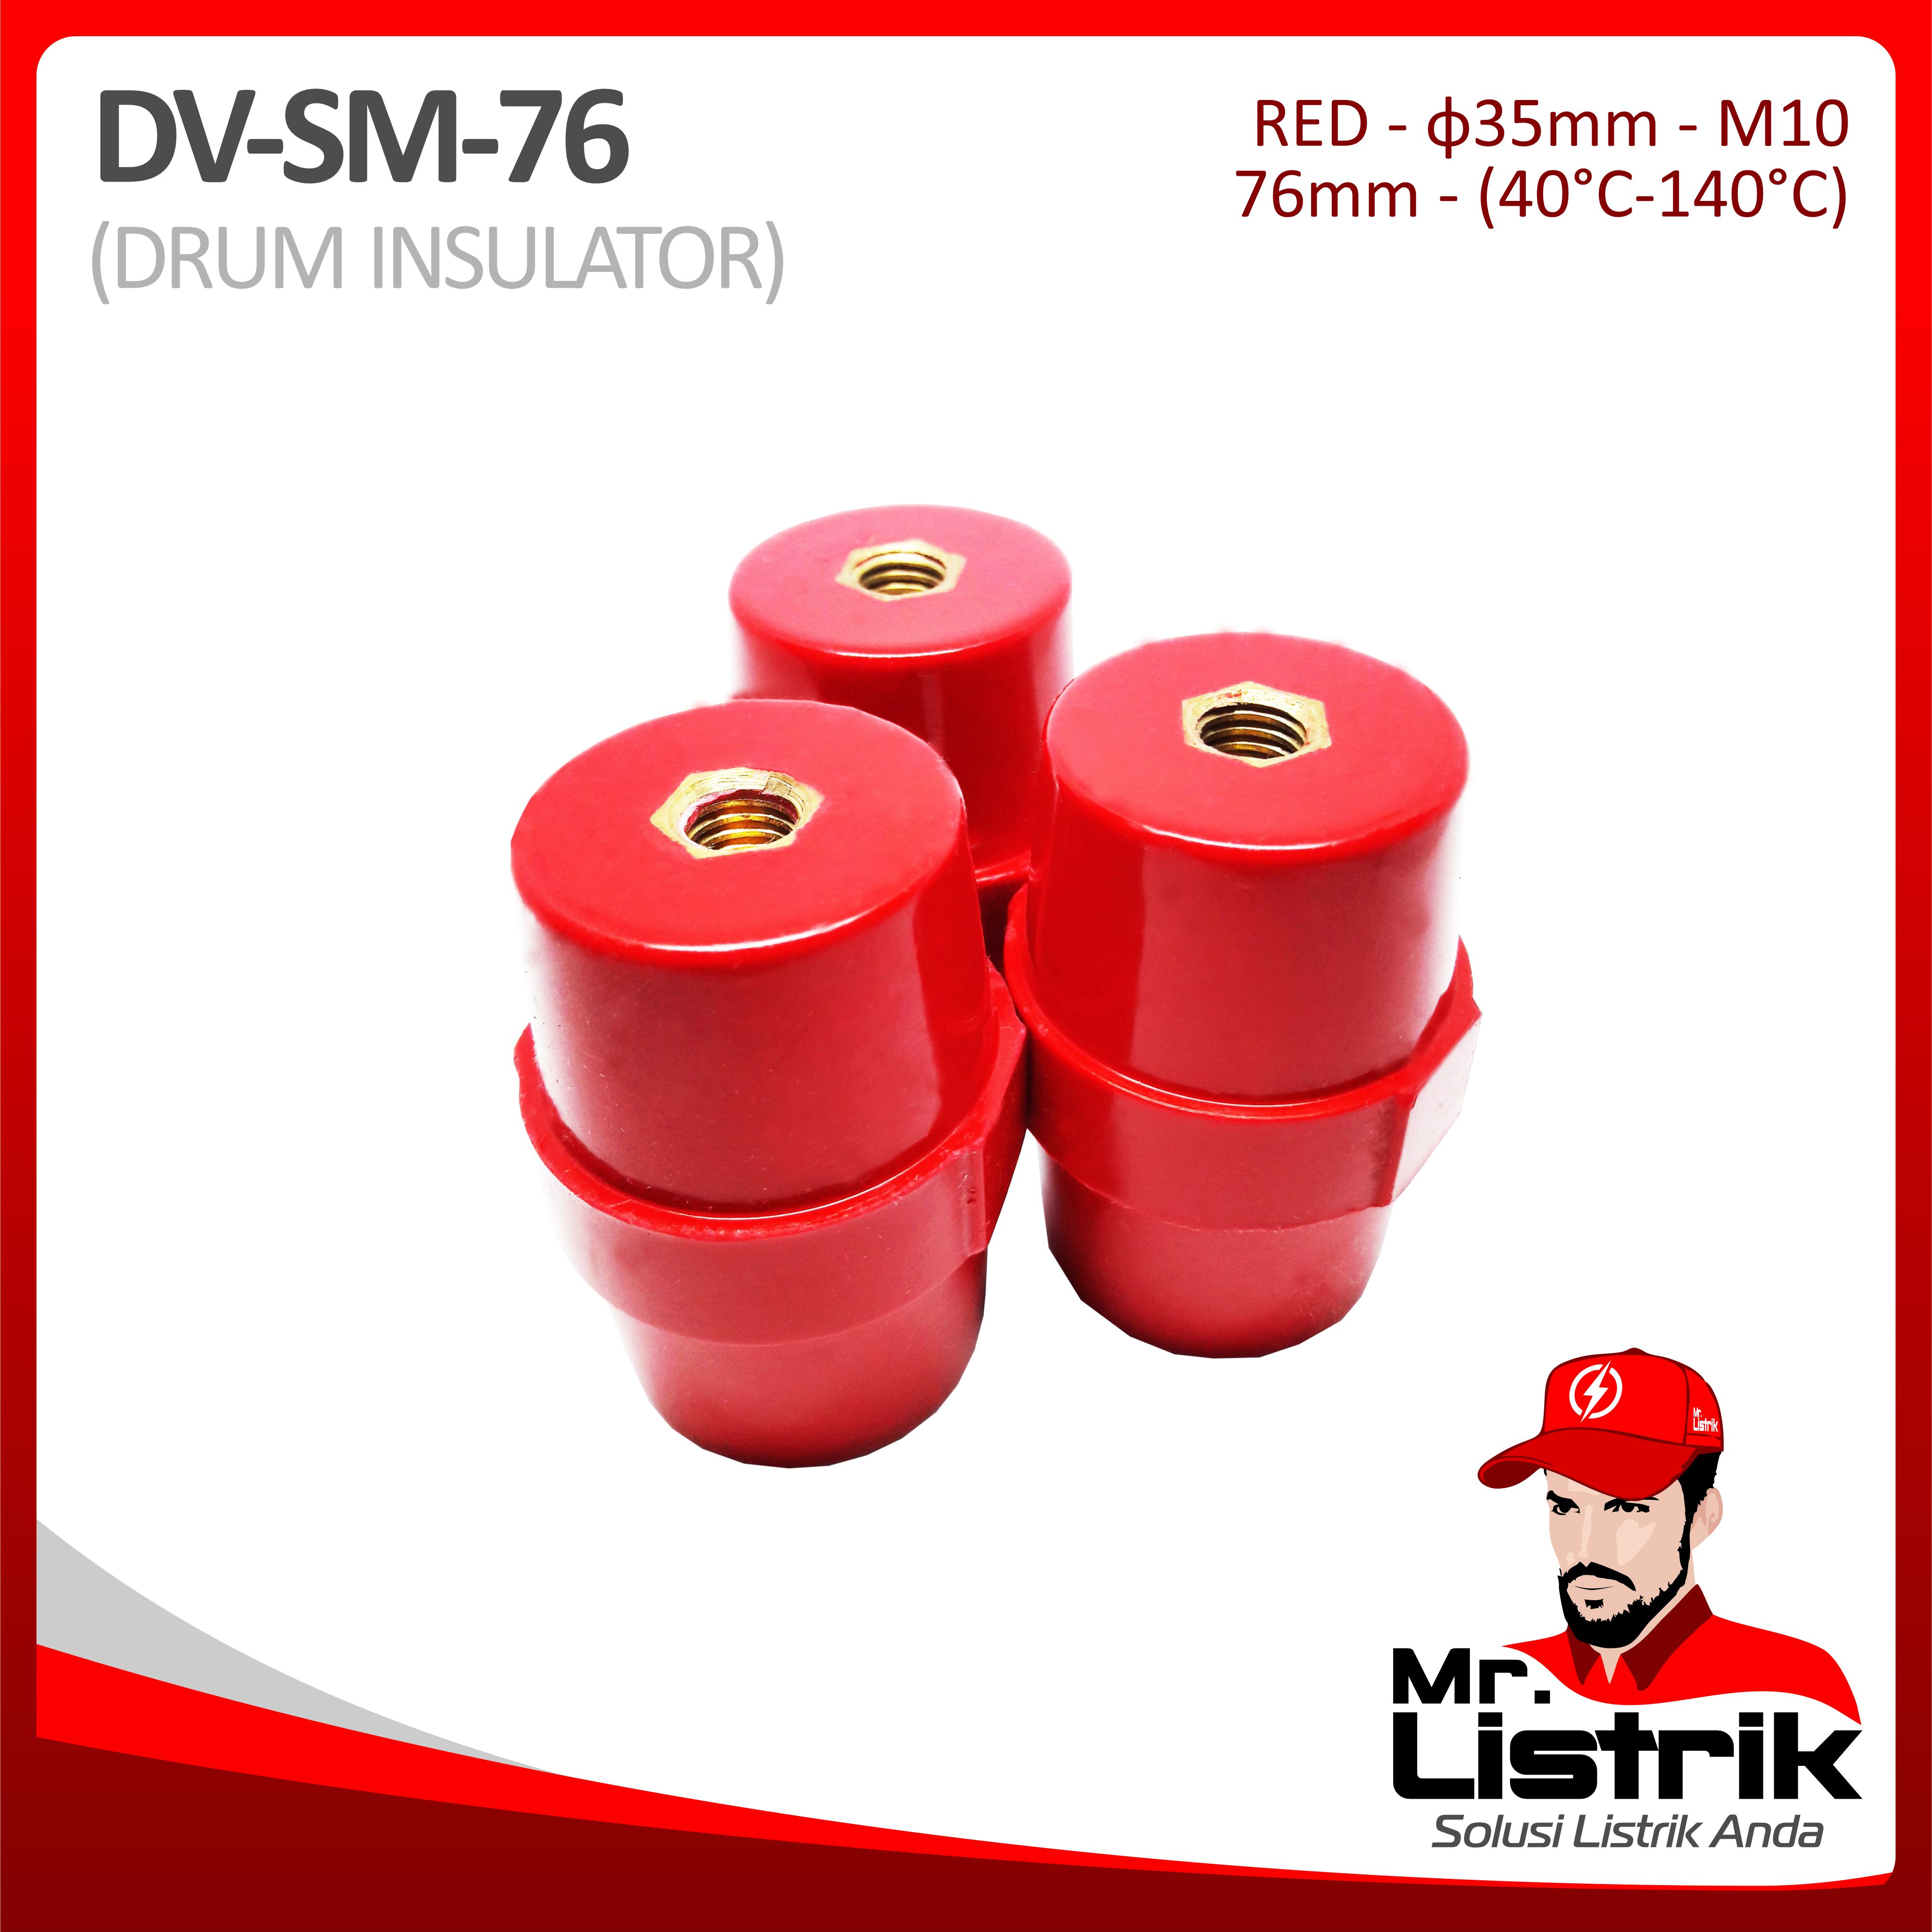 Drum Insulator Rekolit DV SM-76